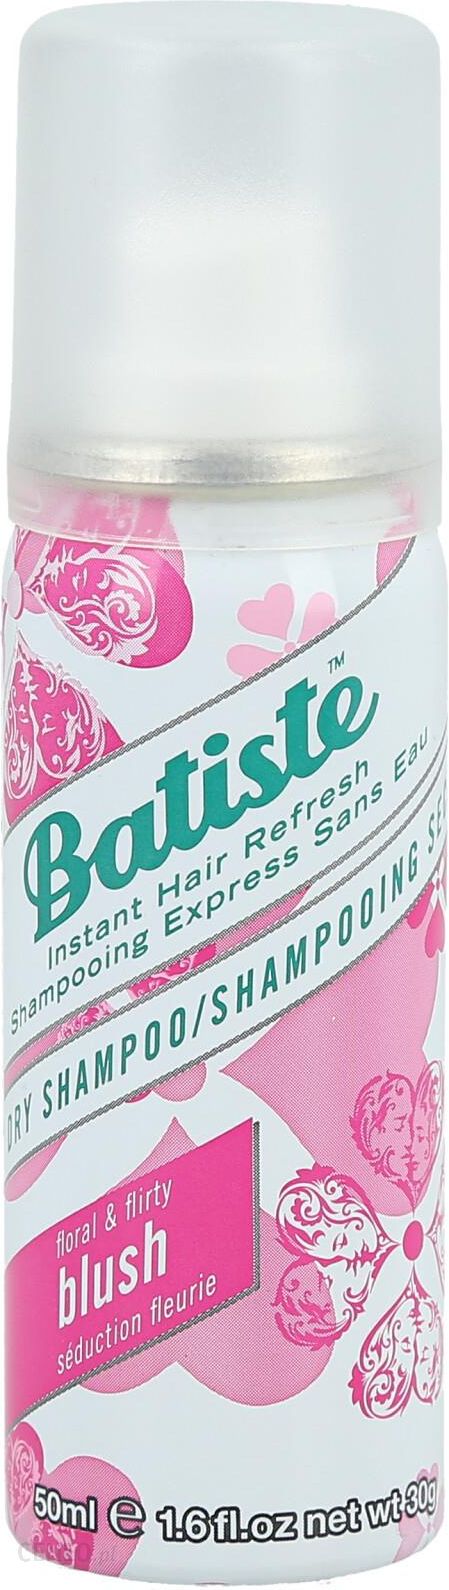 szampon batiste w odcieniach brązu 50 ml